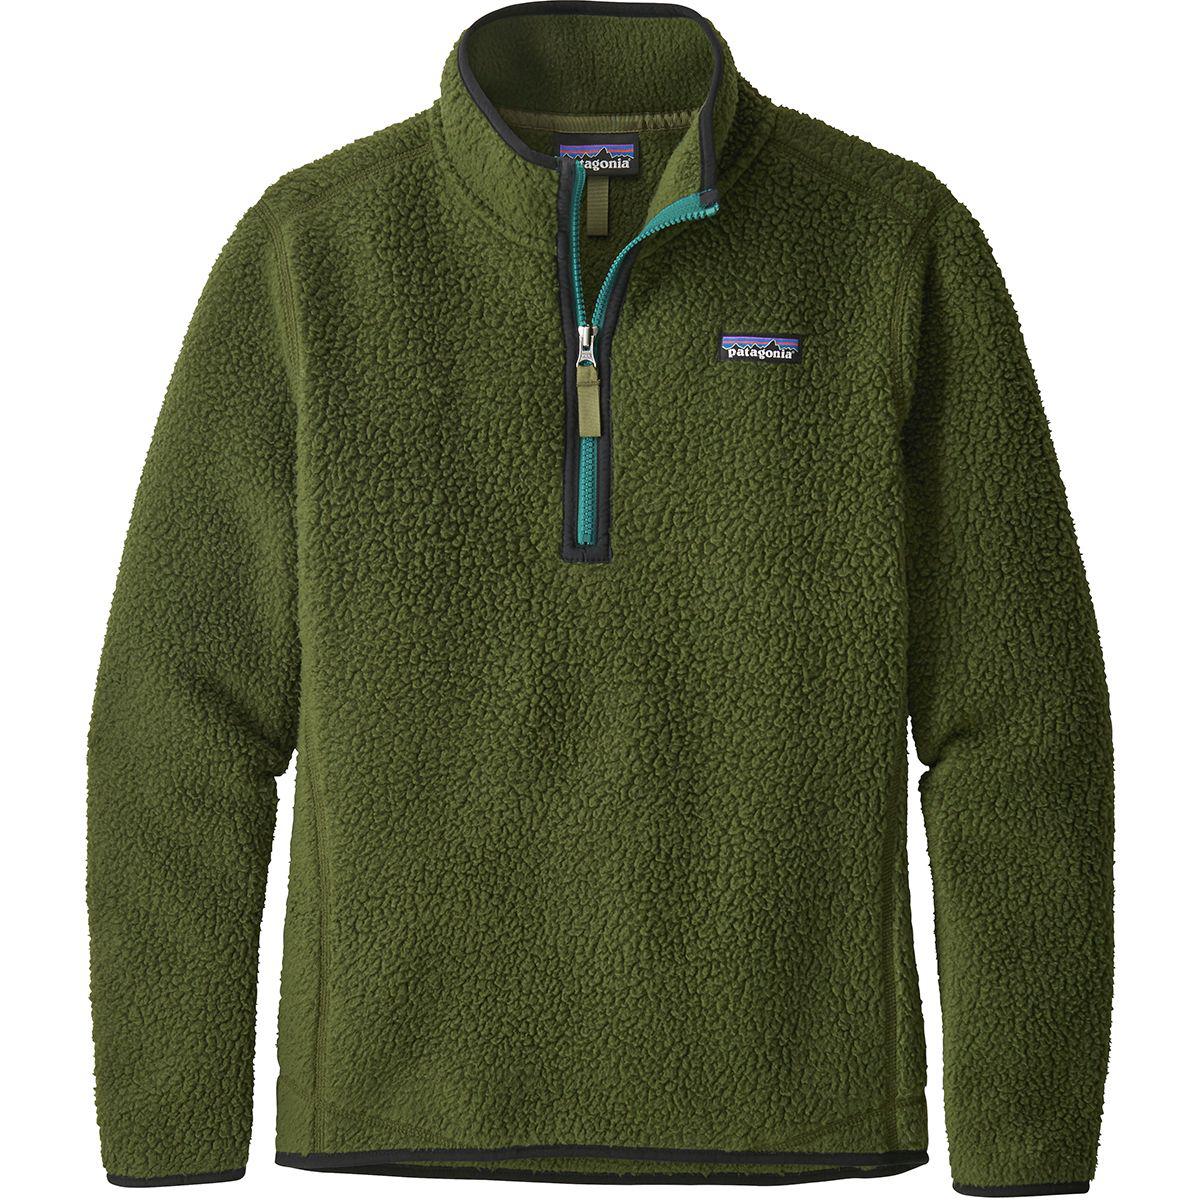 Lyst - Patagonia Retro Pile 1/4-zip Fleece Jacket in Green